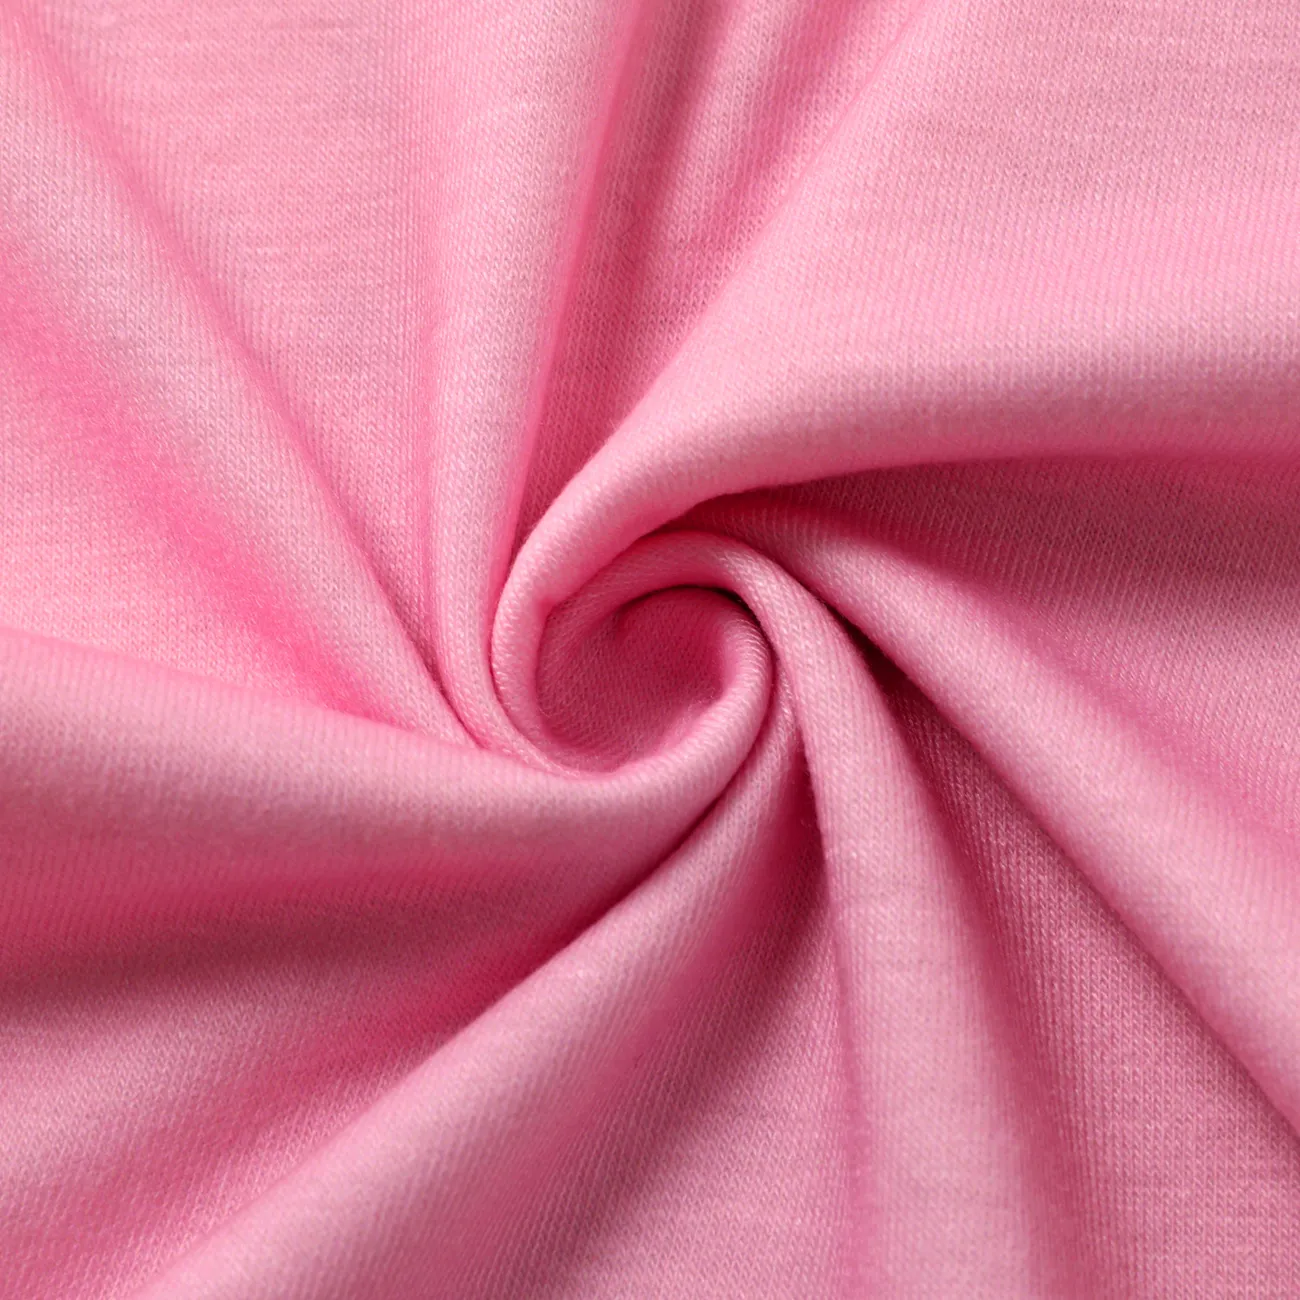 Disney Princess Baby Girl Character Print Ruffled Long-sleeve Bodysuit  Pink big image 1